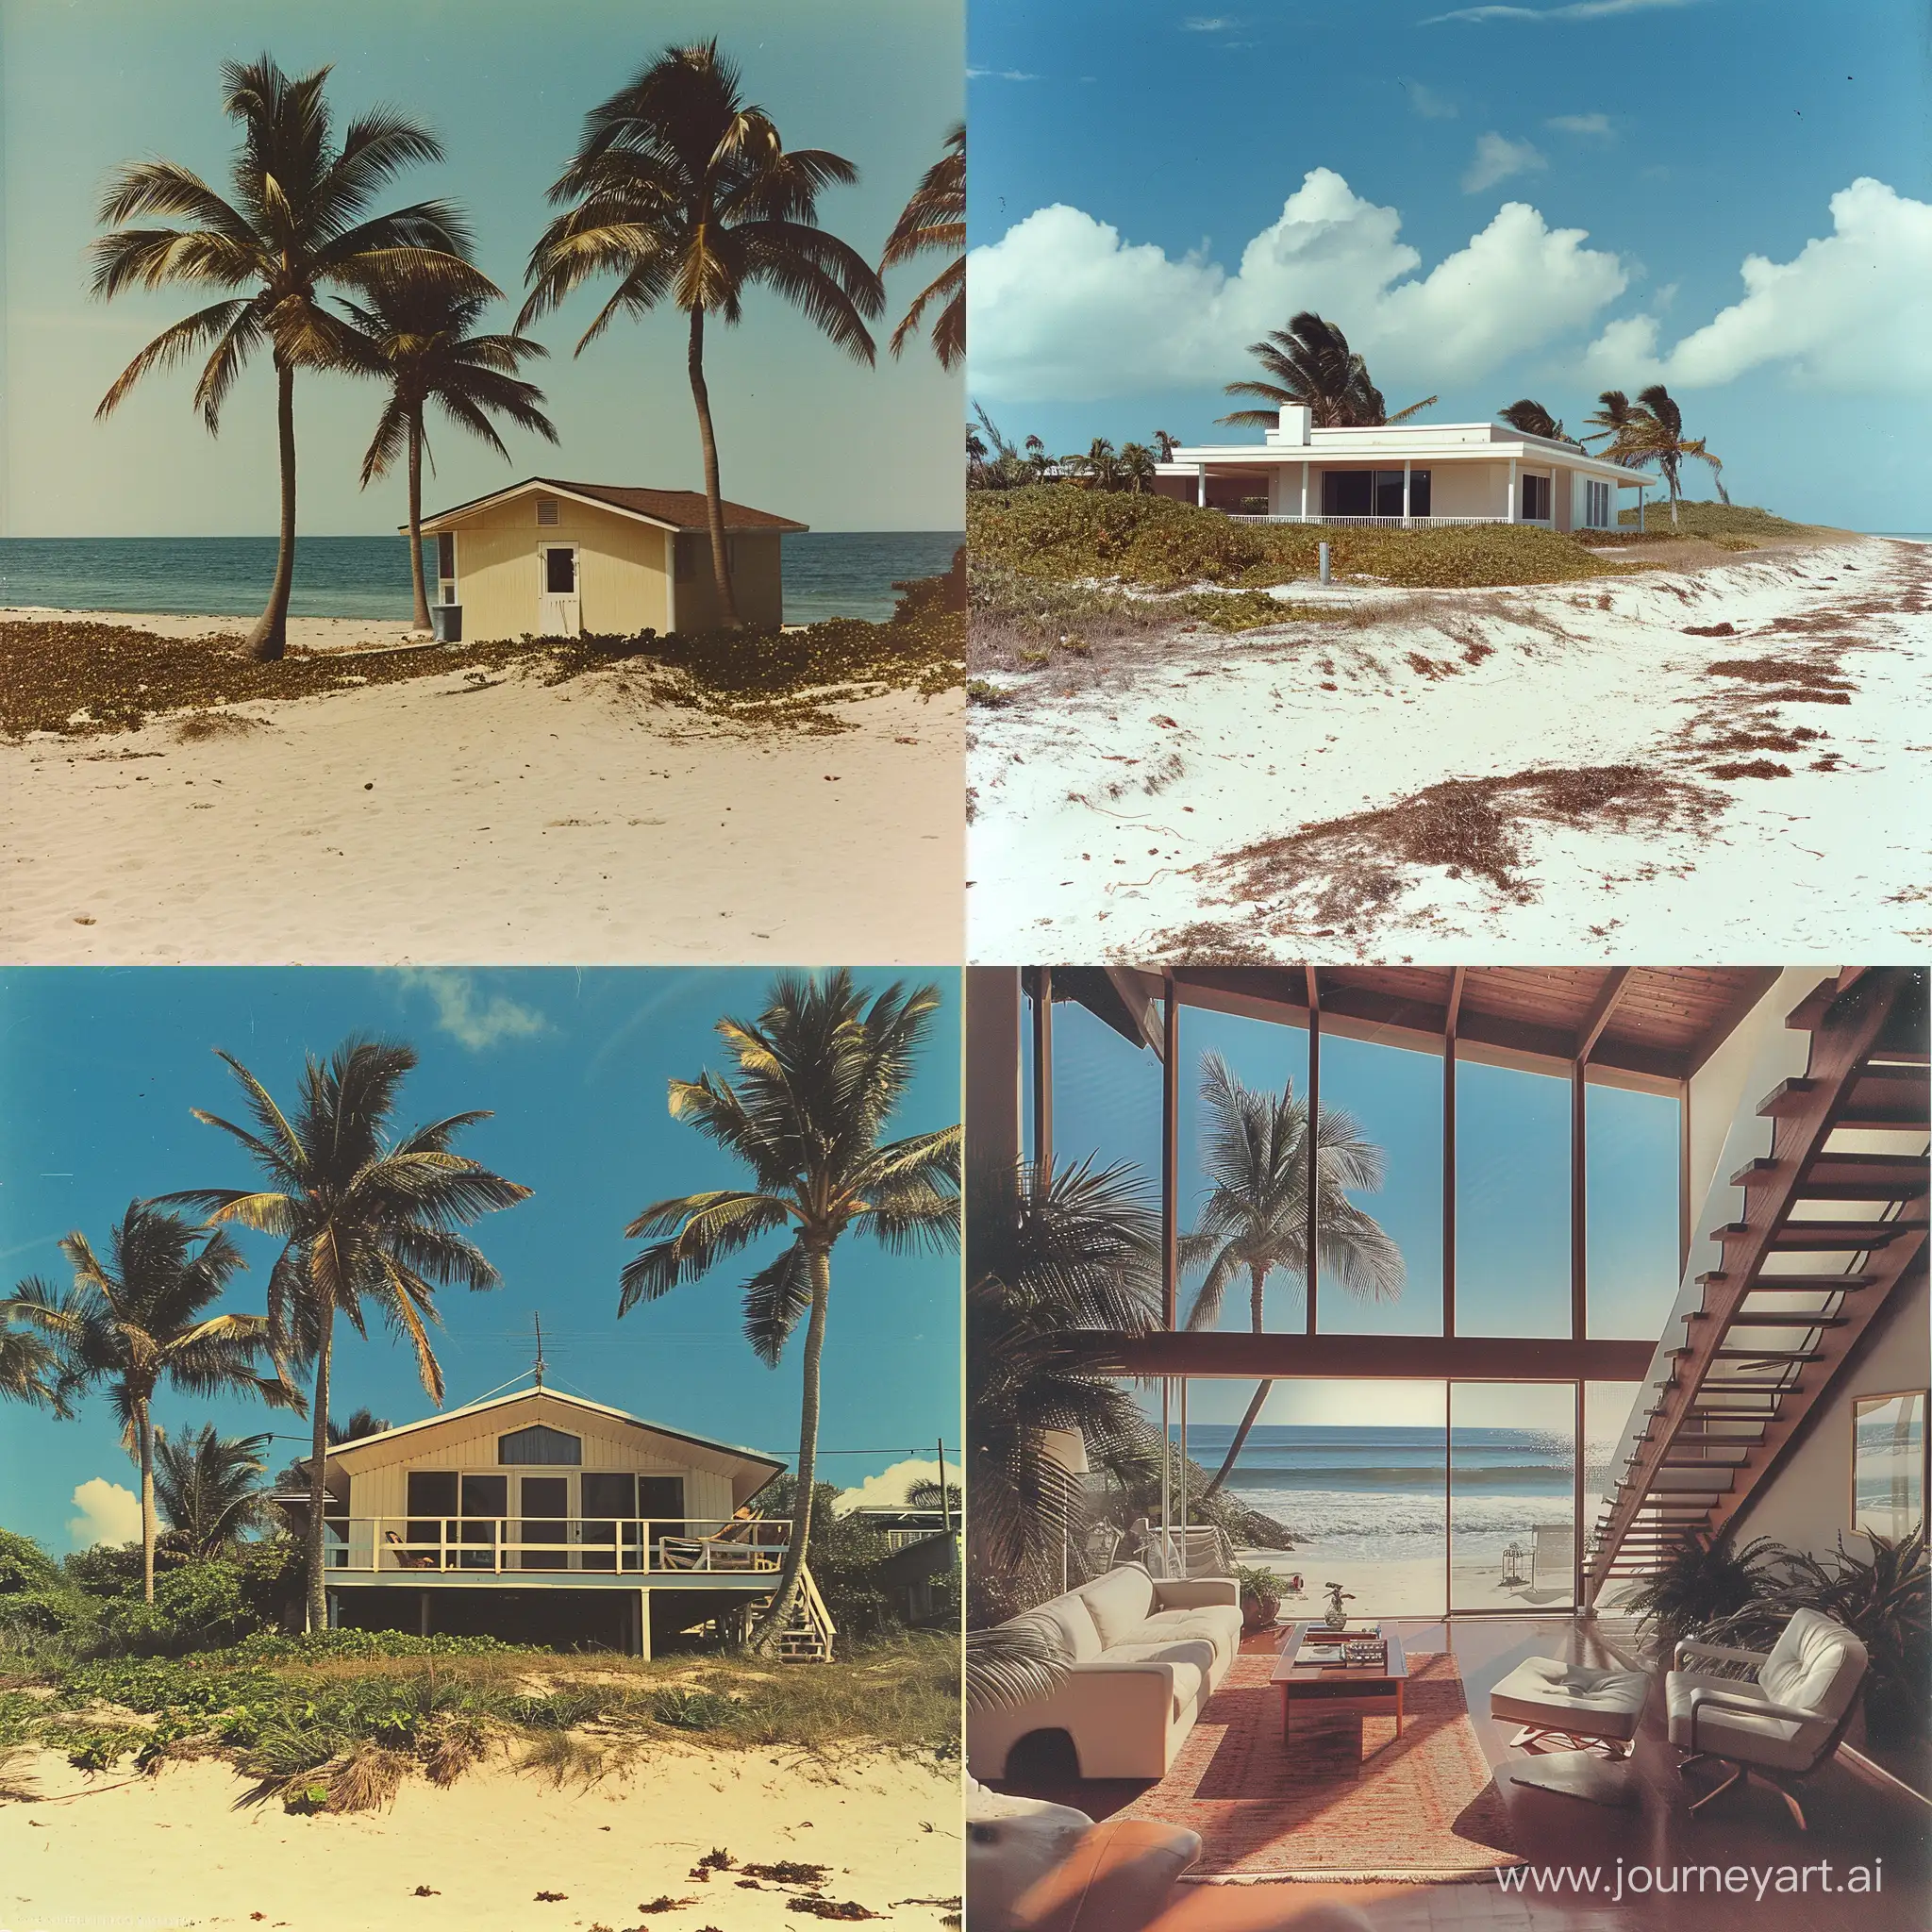 1980s-Beachfront-House-with-Vibrant-Colors-Vintage-Coastal-Home